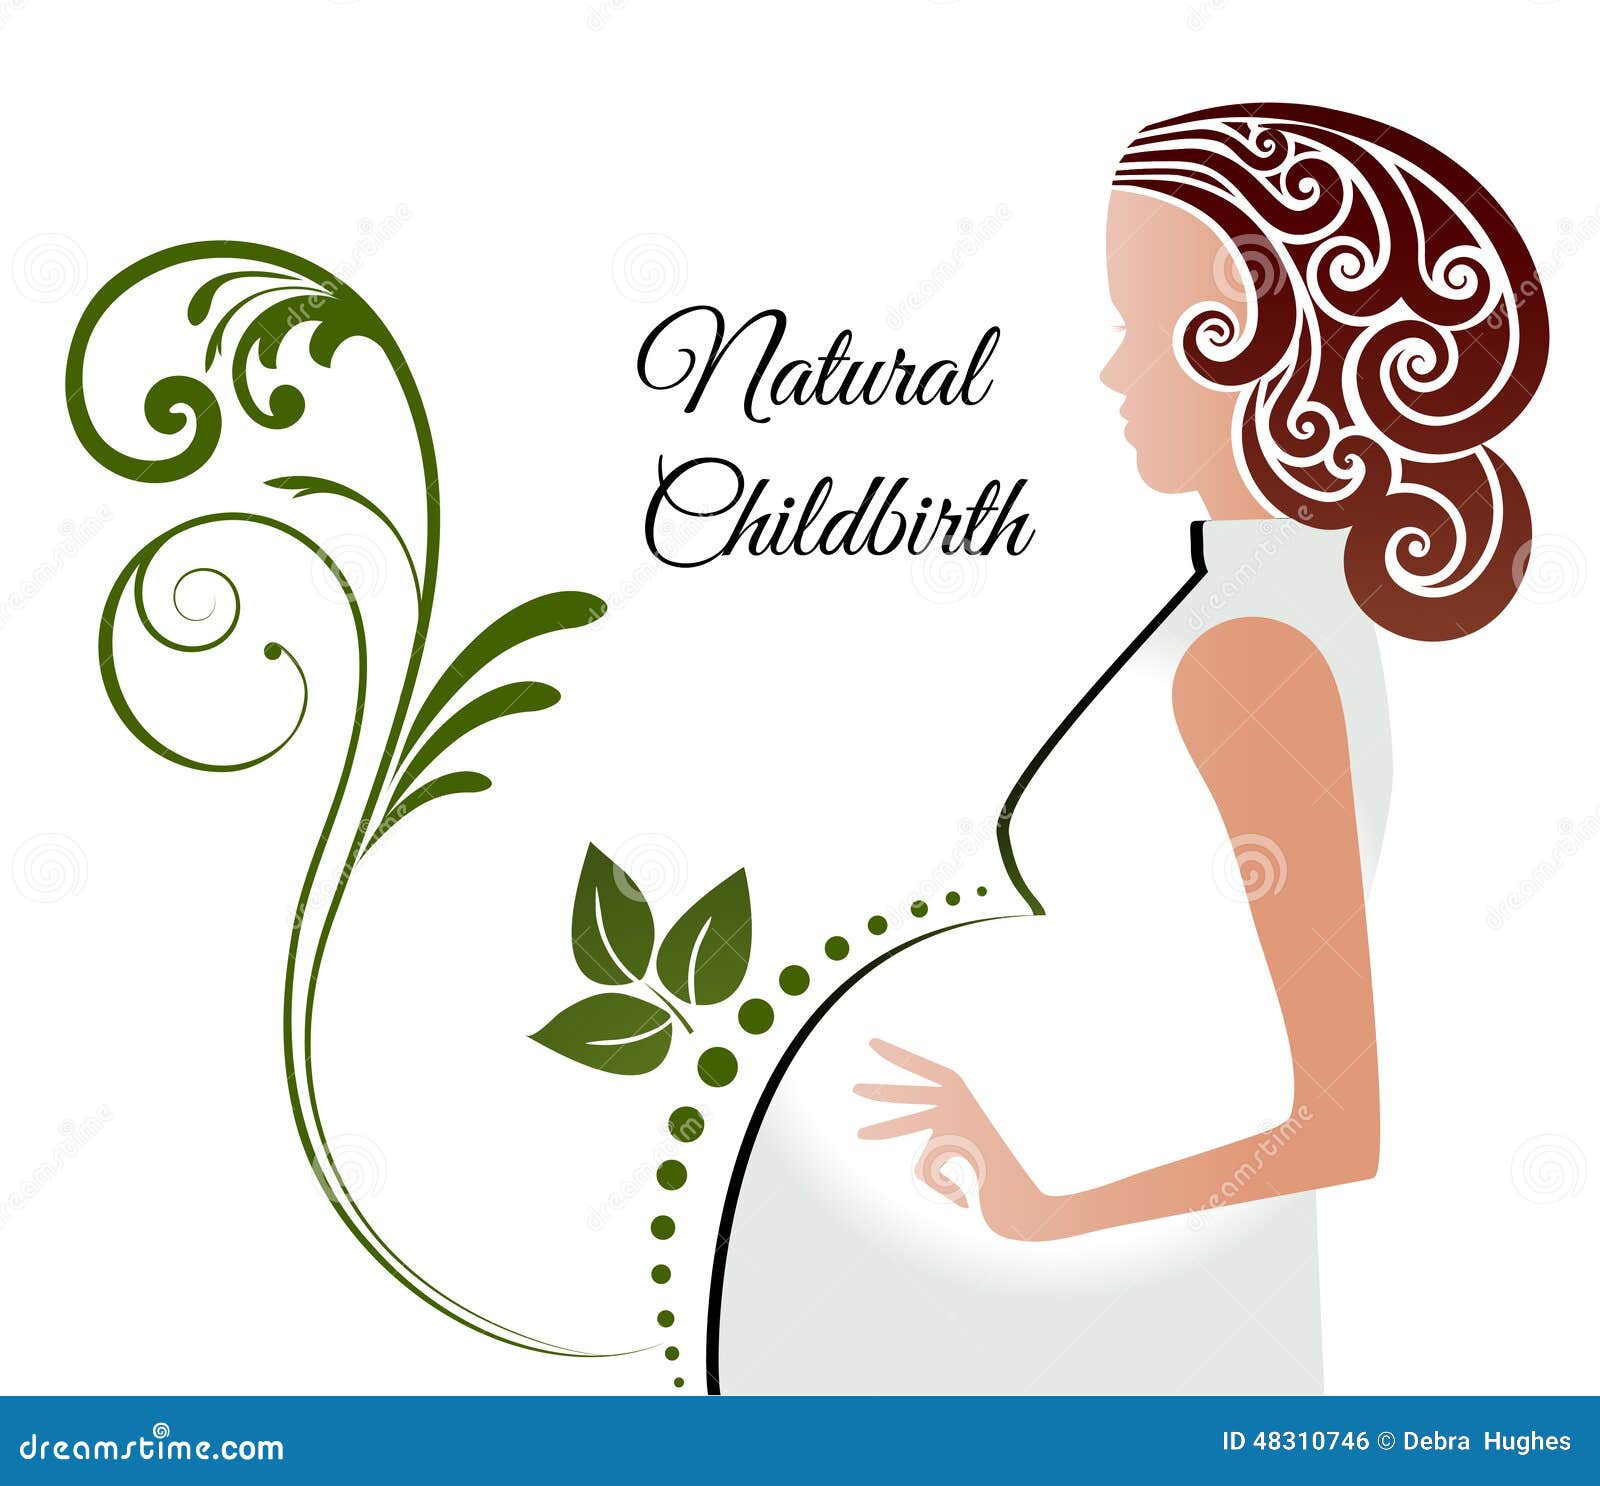 pregnancy natural childbirth